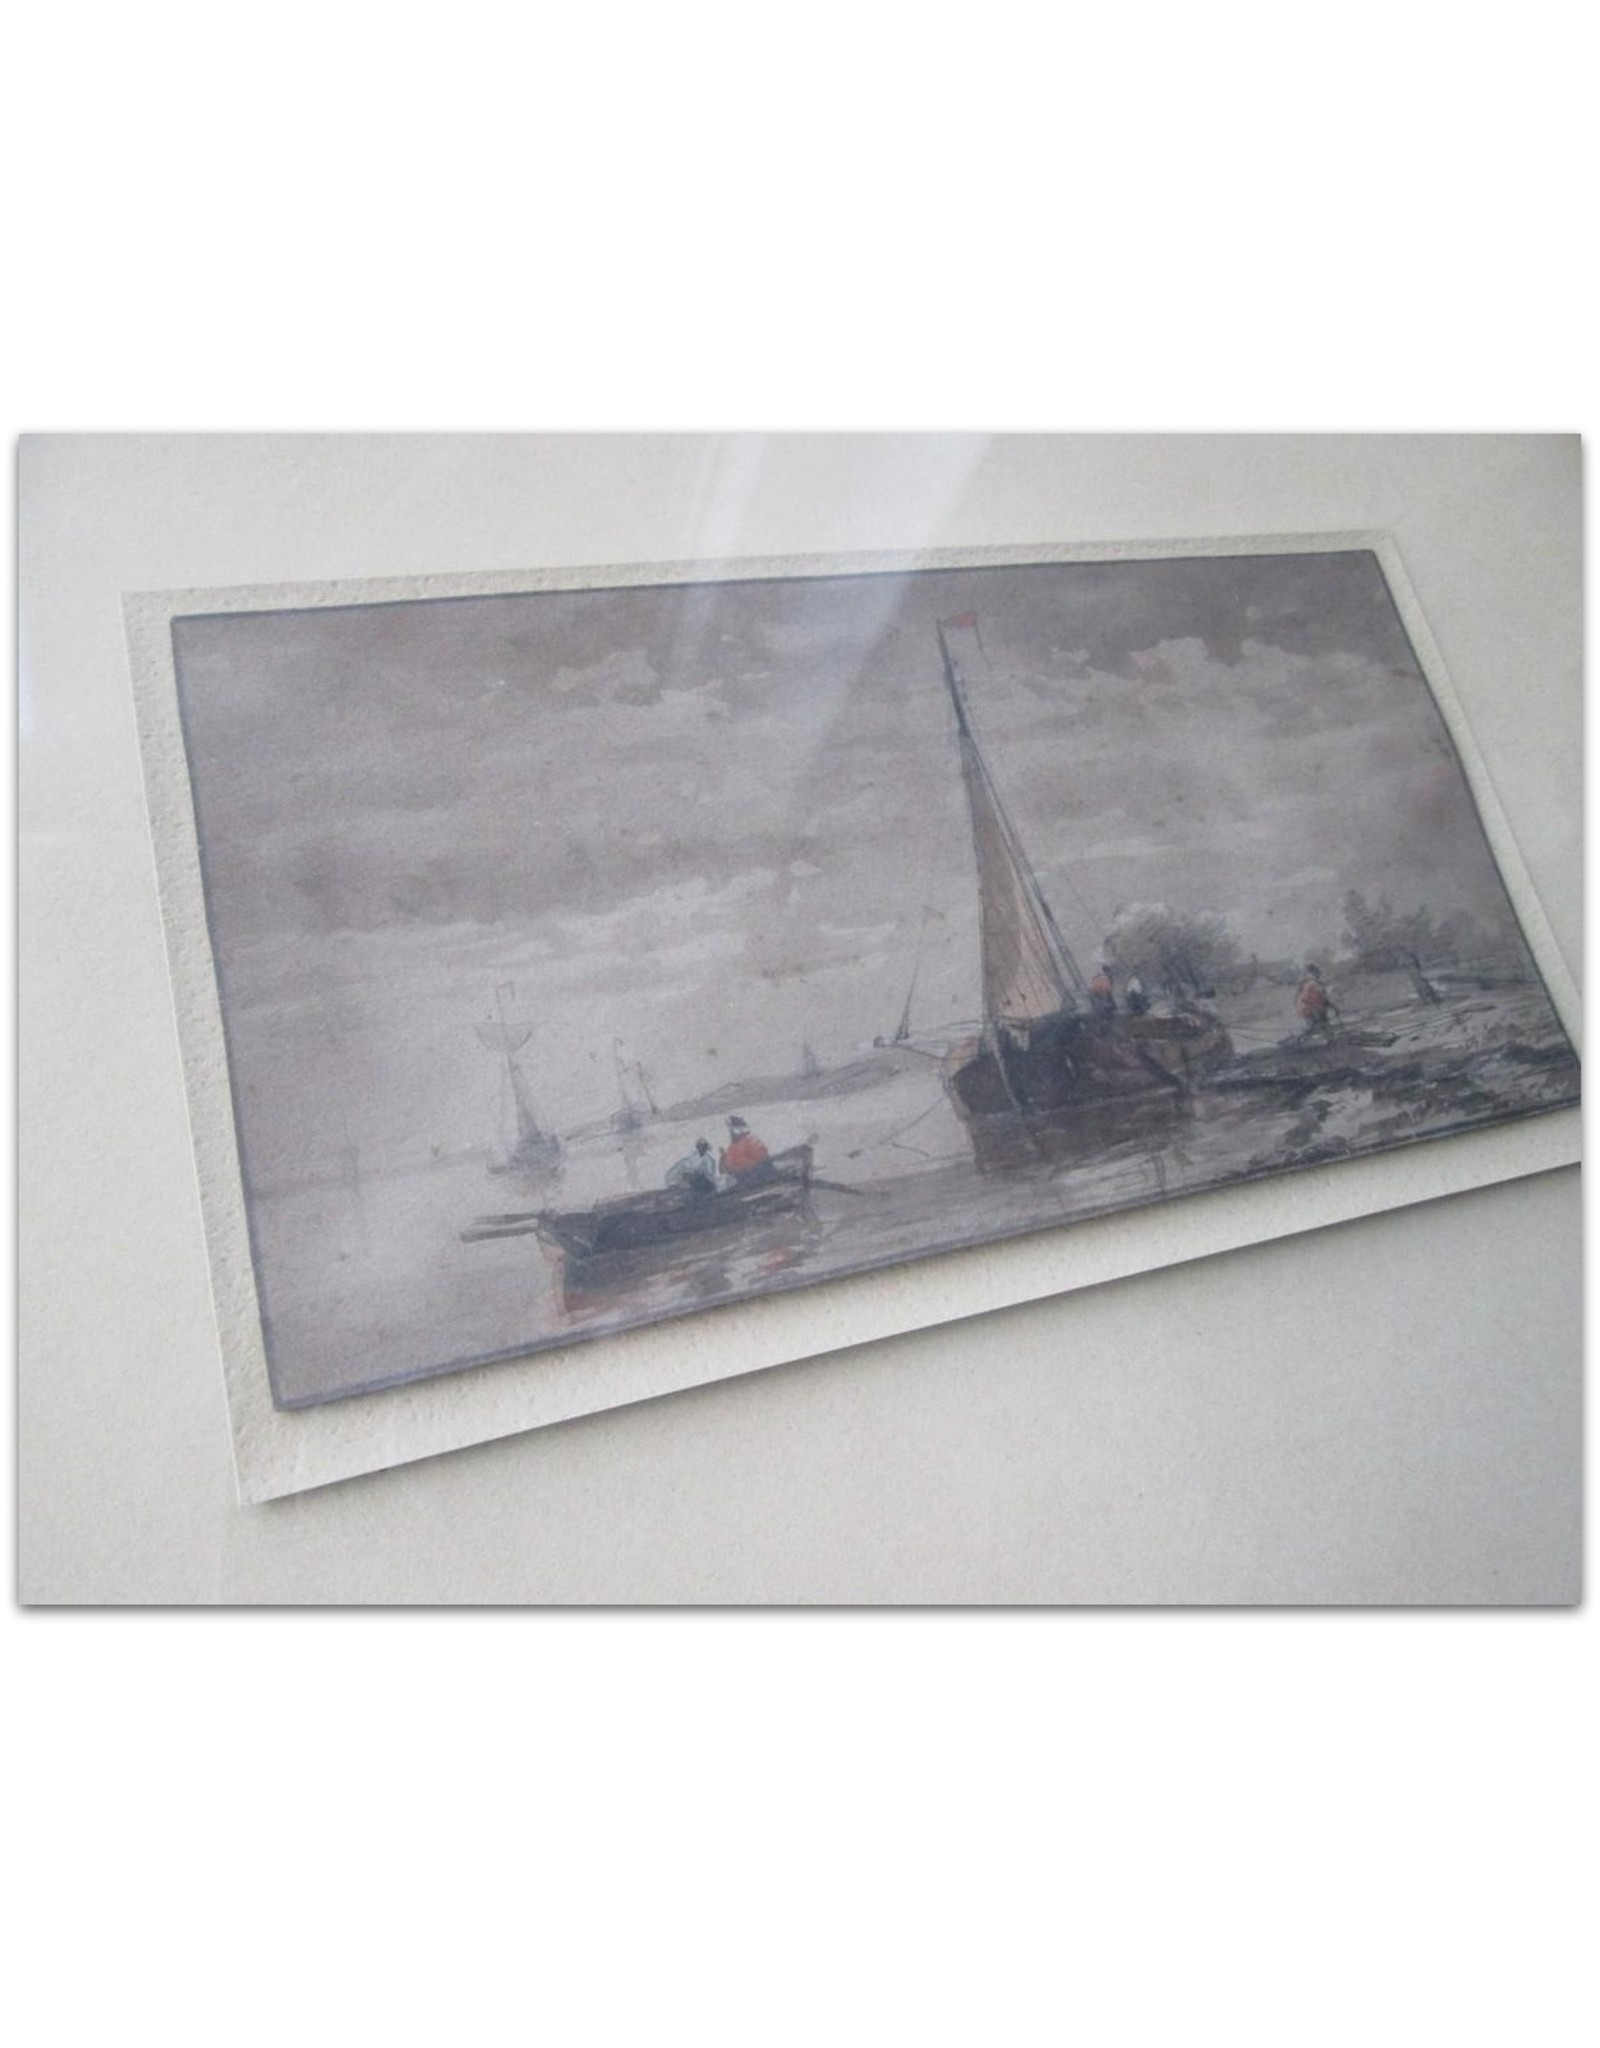 [H.W. Mesdag] - Fisherman's scene [19th century, watercolor on paper]